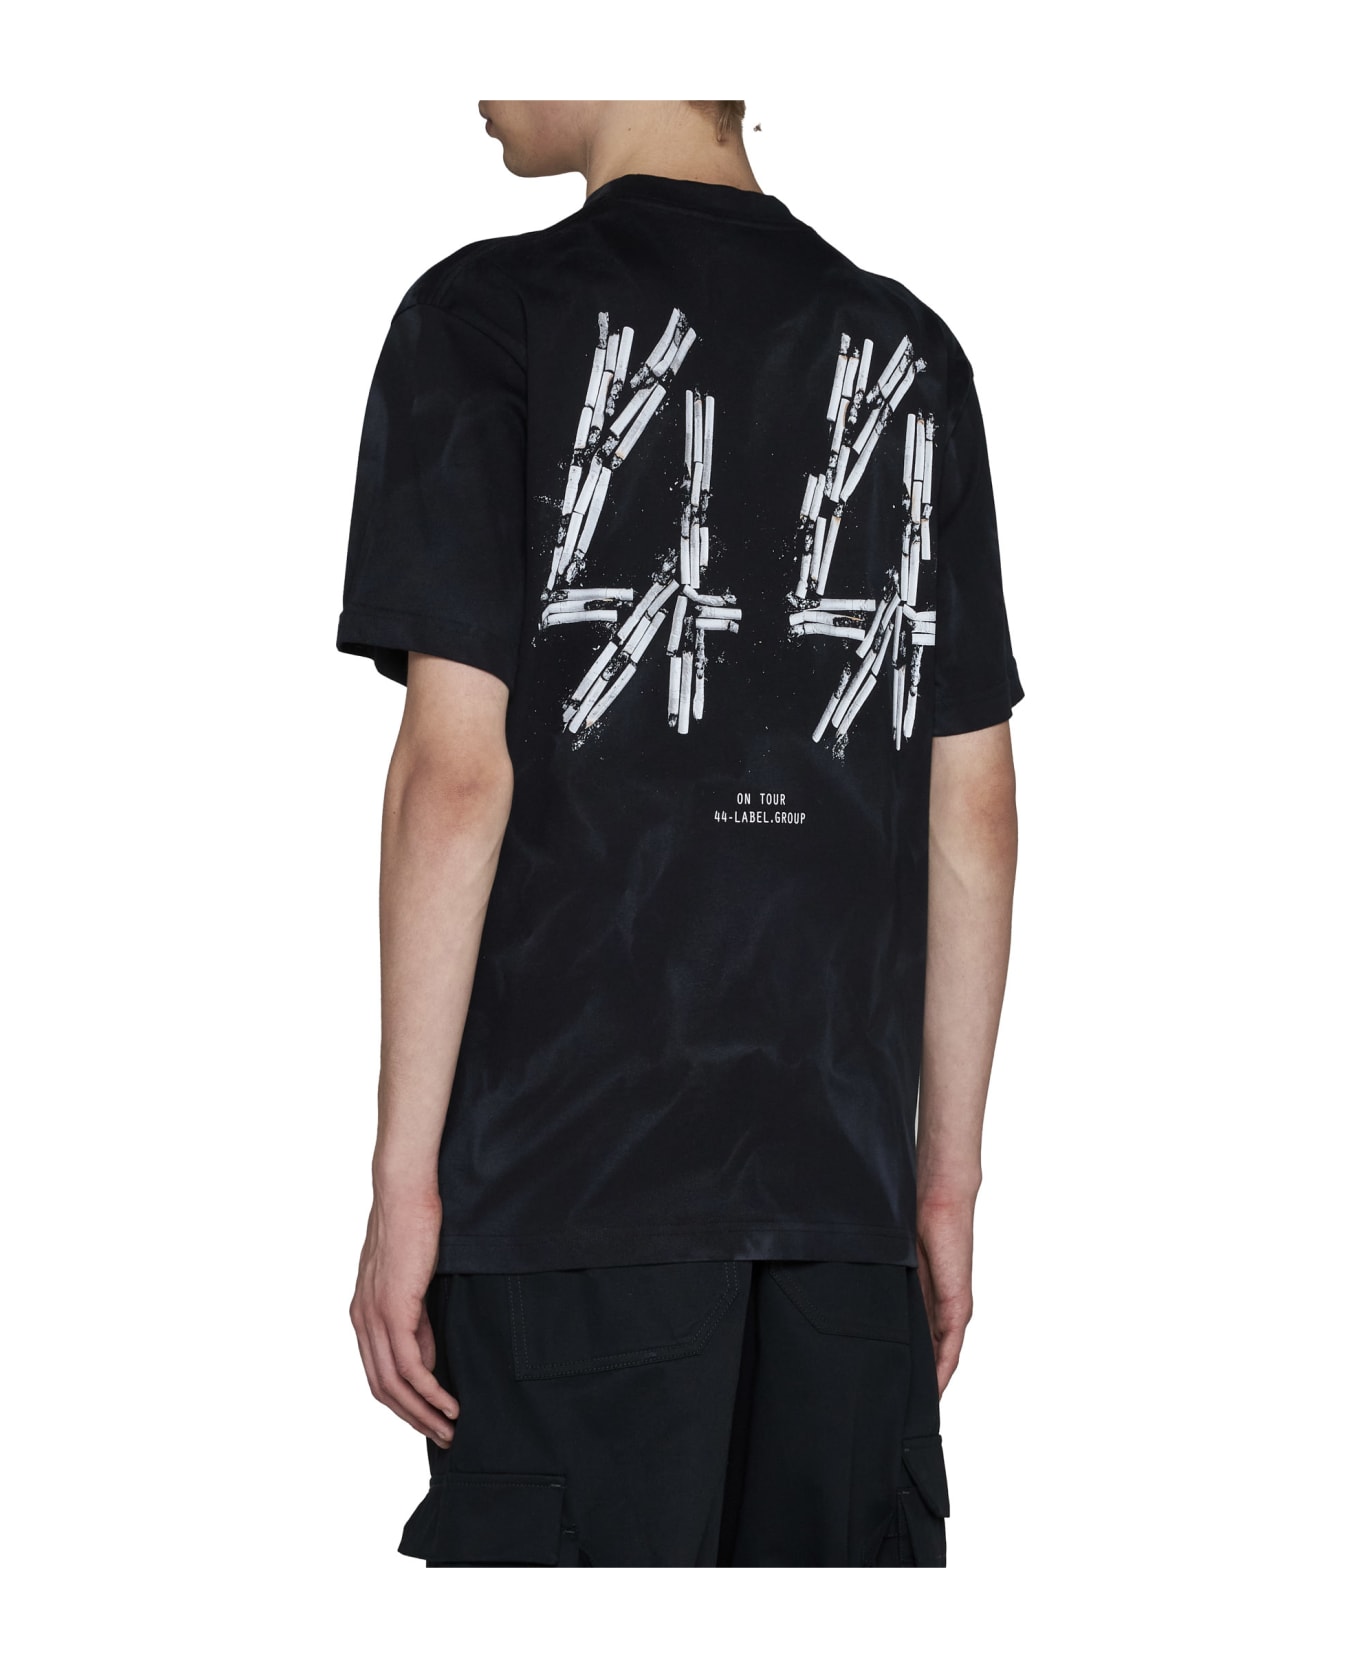 44 Label Group T-Shirt - Black+smoke effect+44 smoke